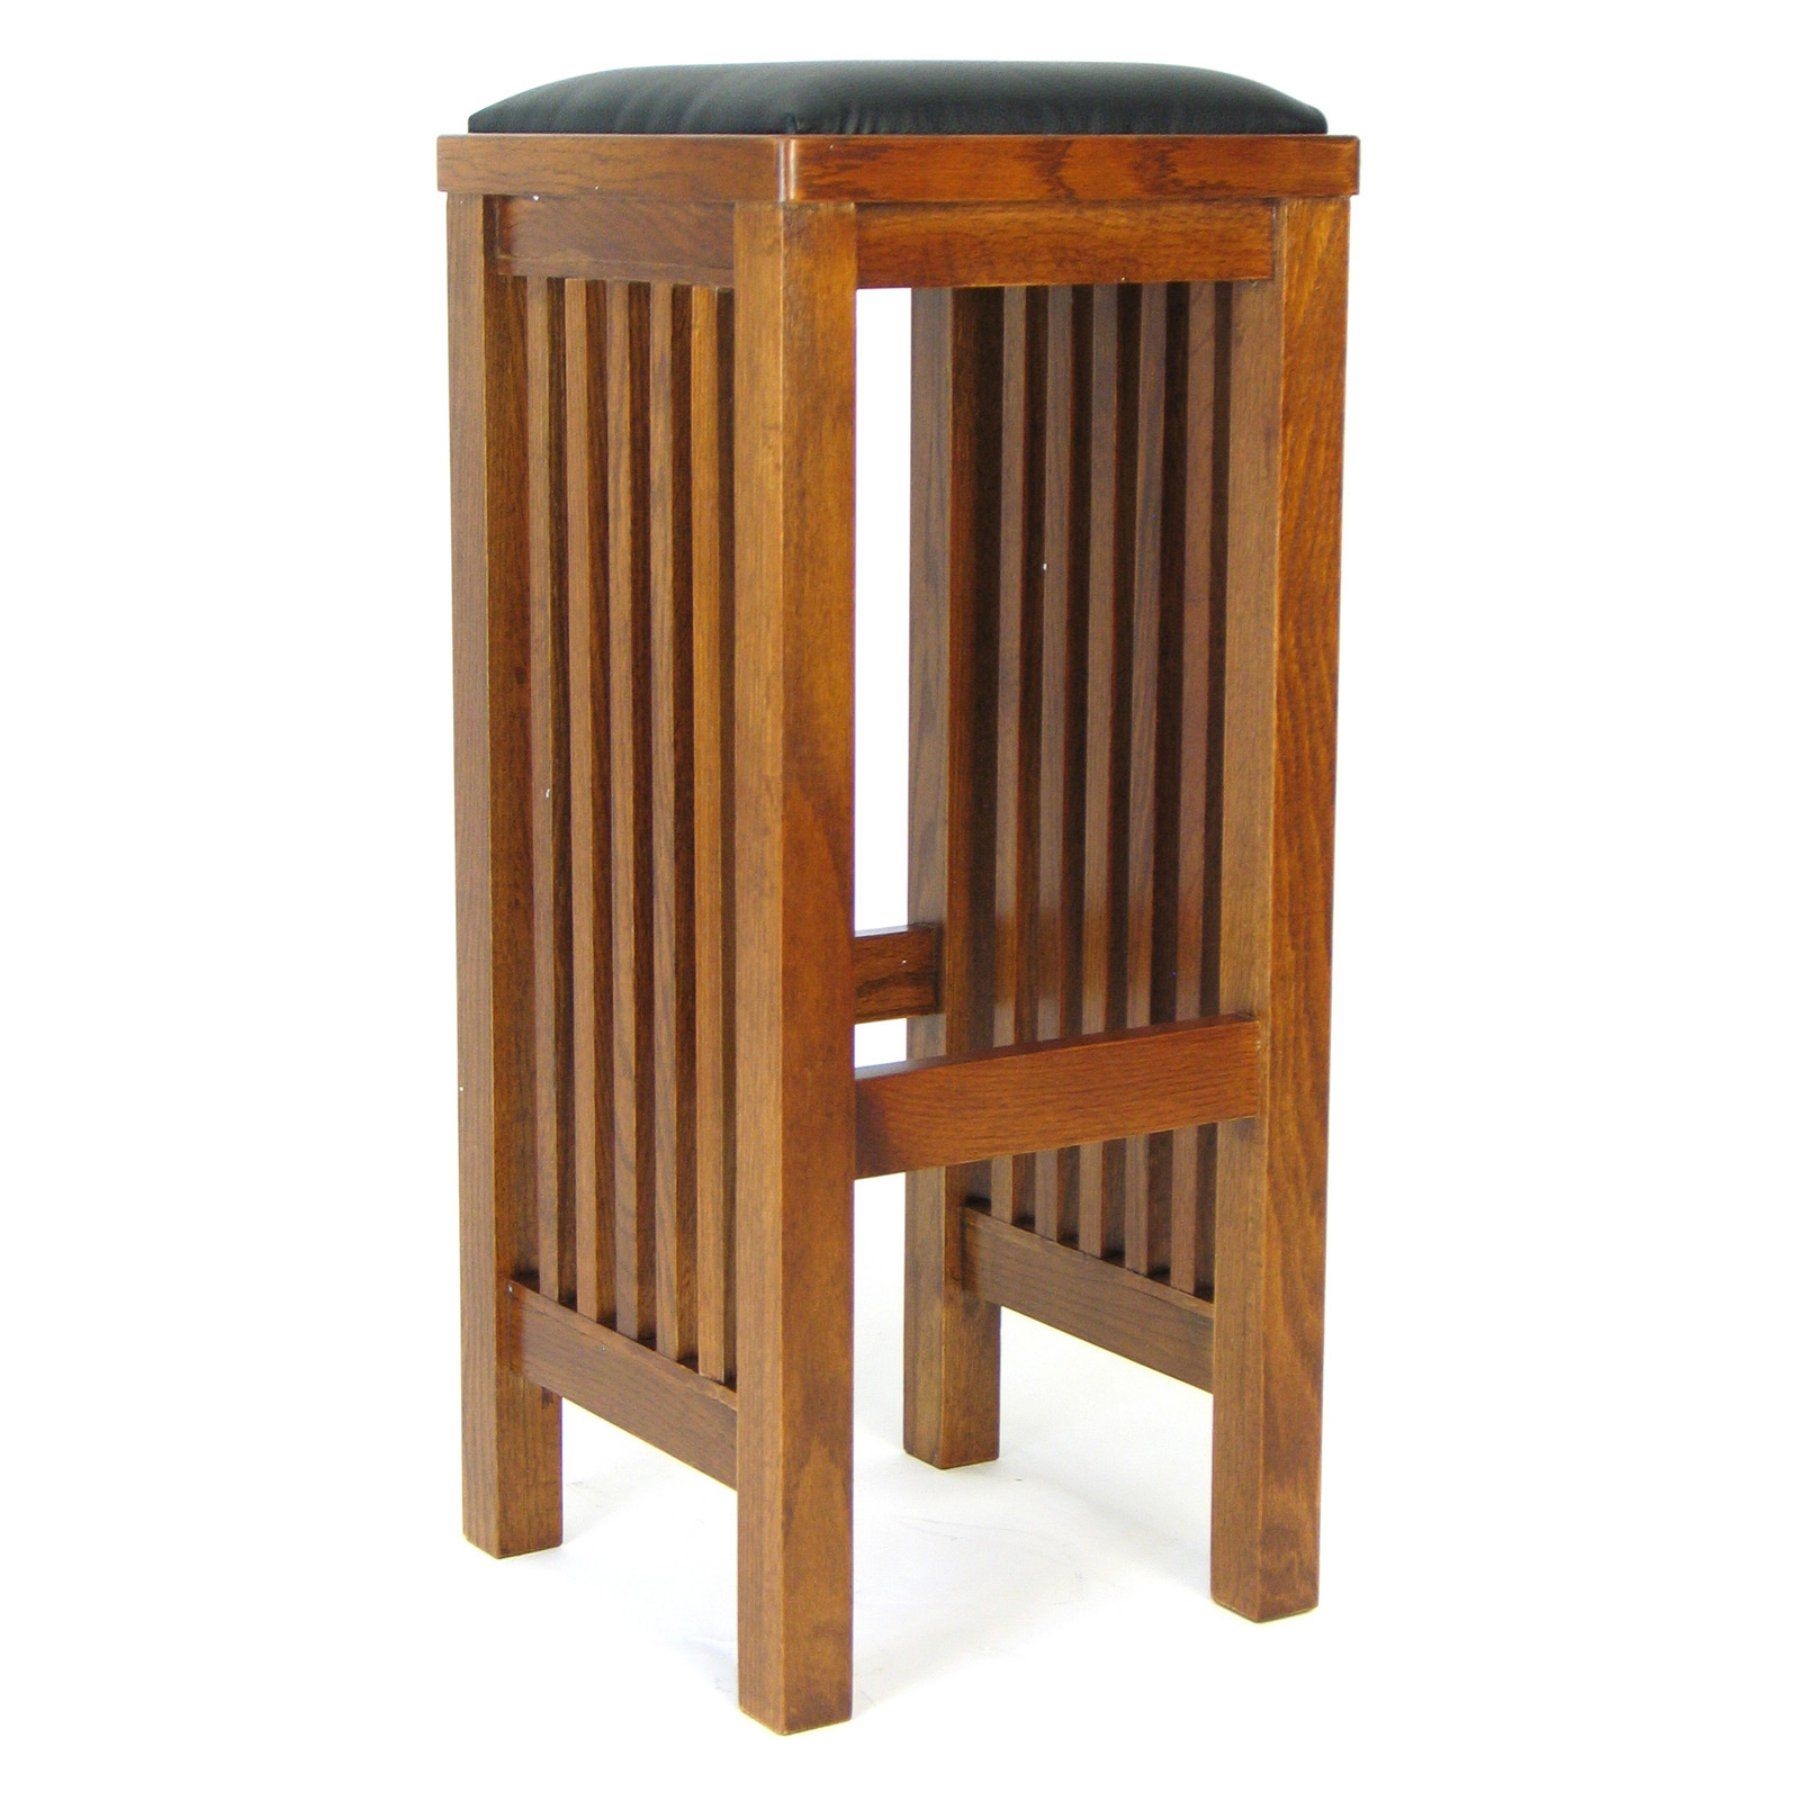 Mission style bar stools 7